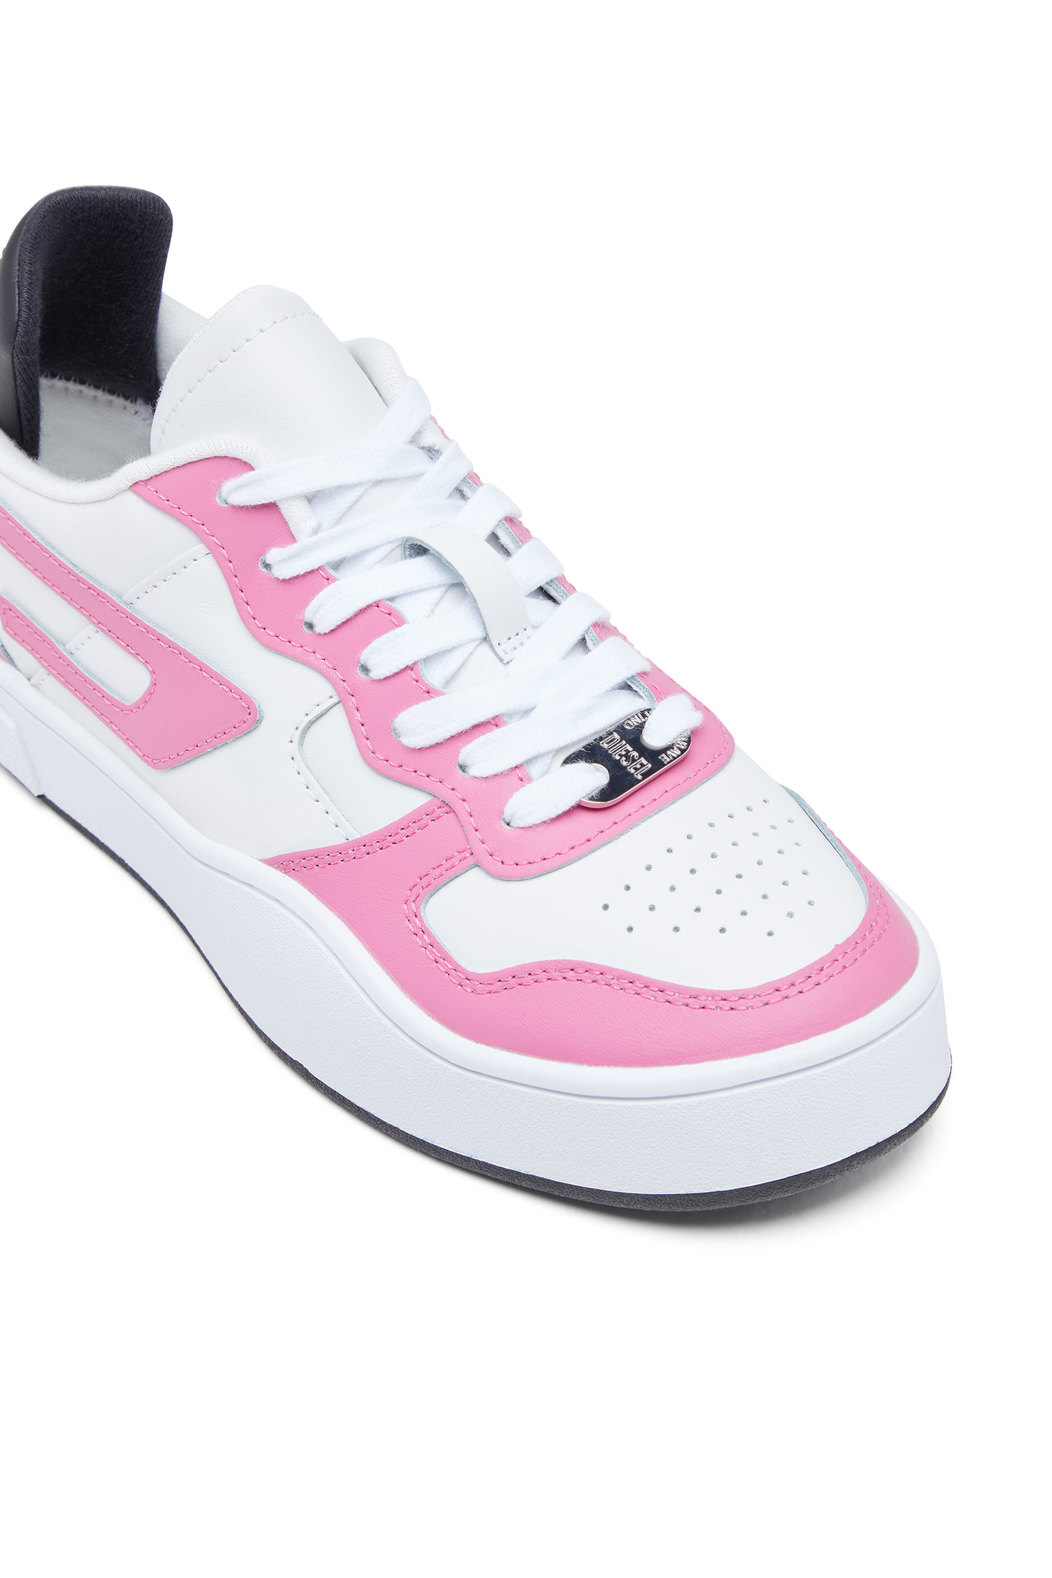 S-Ukiyo Low W - Sneakers with contrast overlays